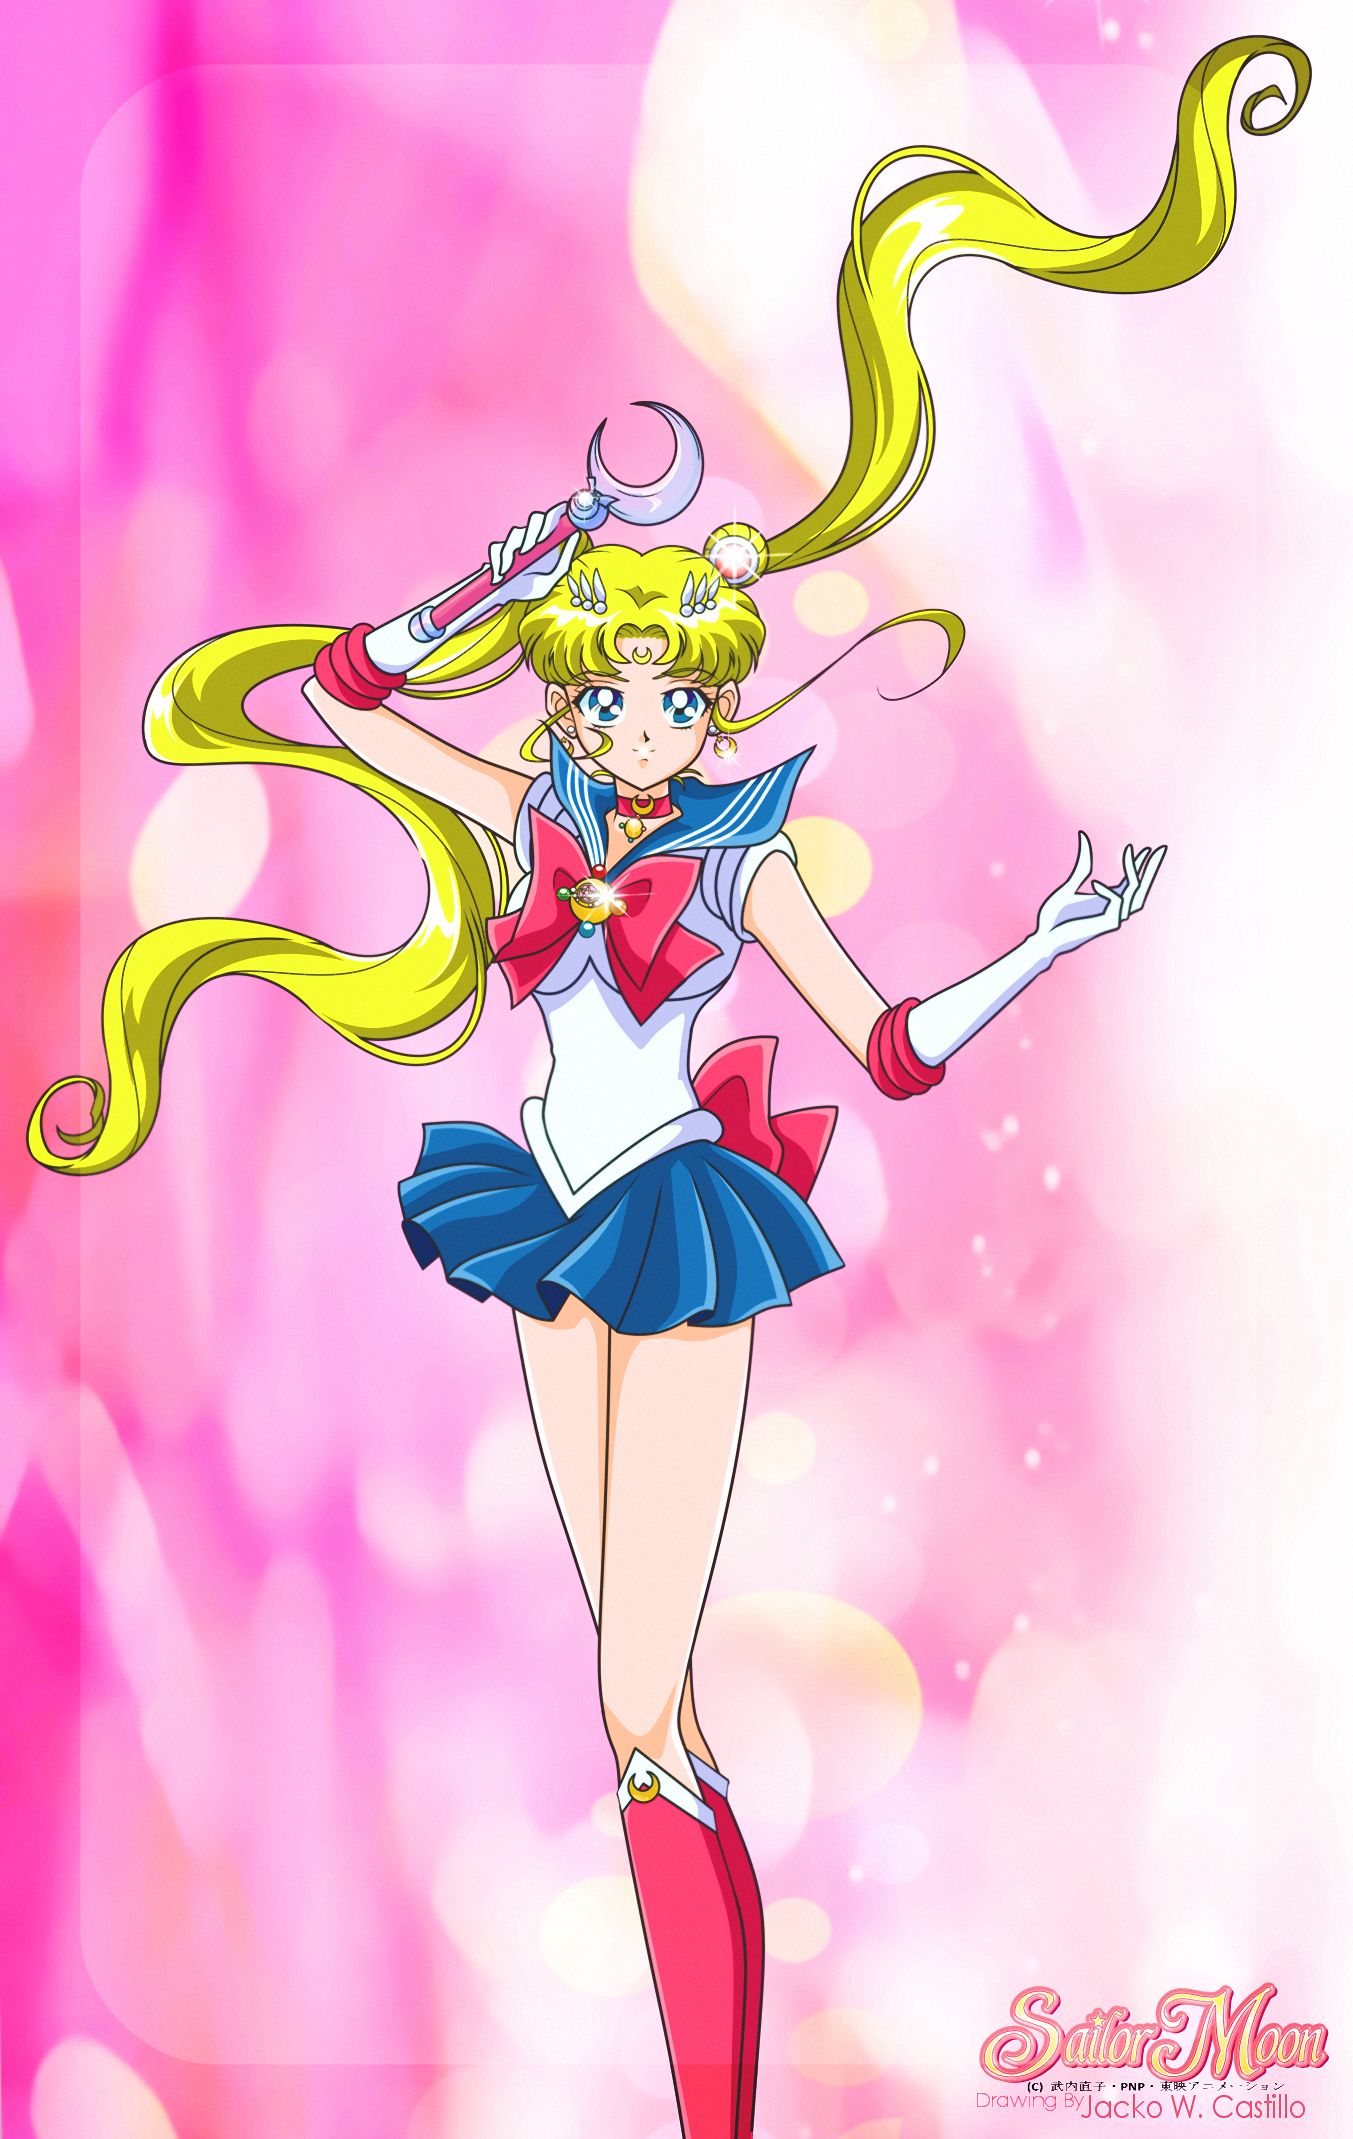 SAILOR MOON MANGA Sailor Moon Kanzenban (Cover) by JackoWcastillo on DeviantArt